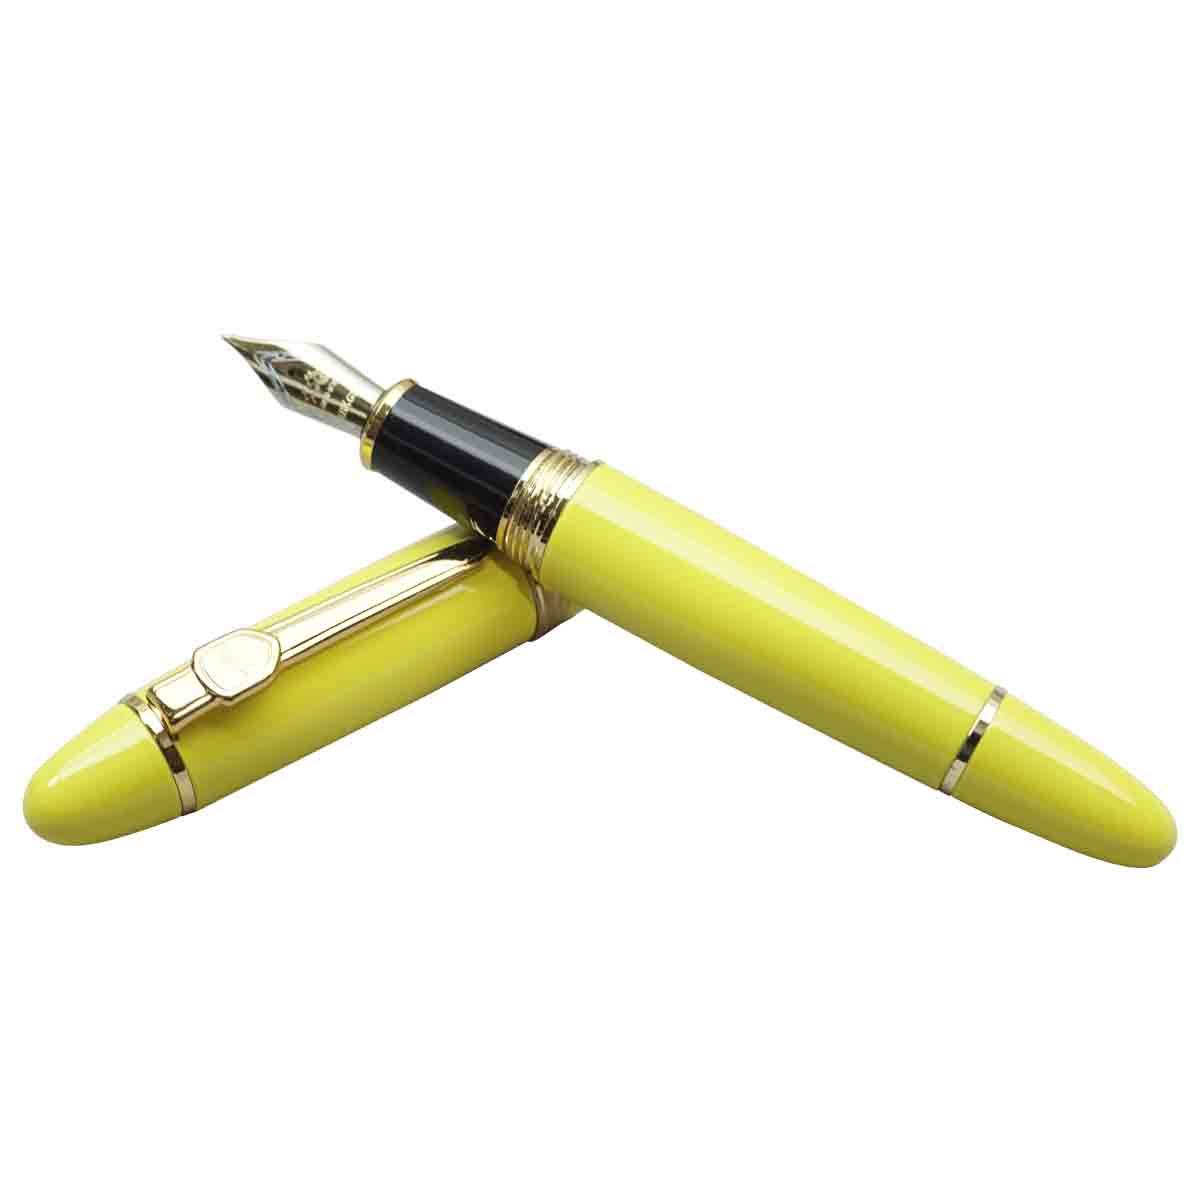 Jinhao 159 - Yellow Golor Body and Cap Convertoer Type Fountain Pen with No.35 Dual Tone Medium Nib SKU 19635